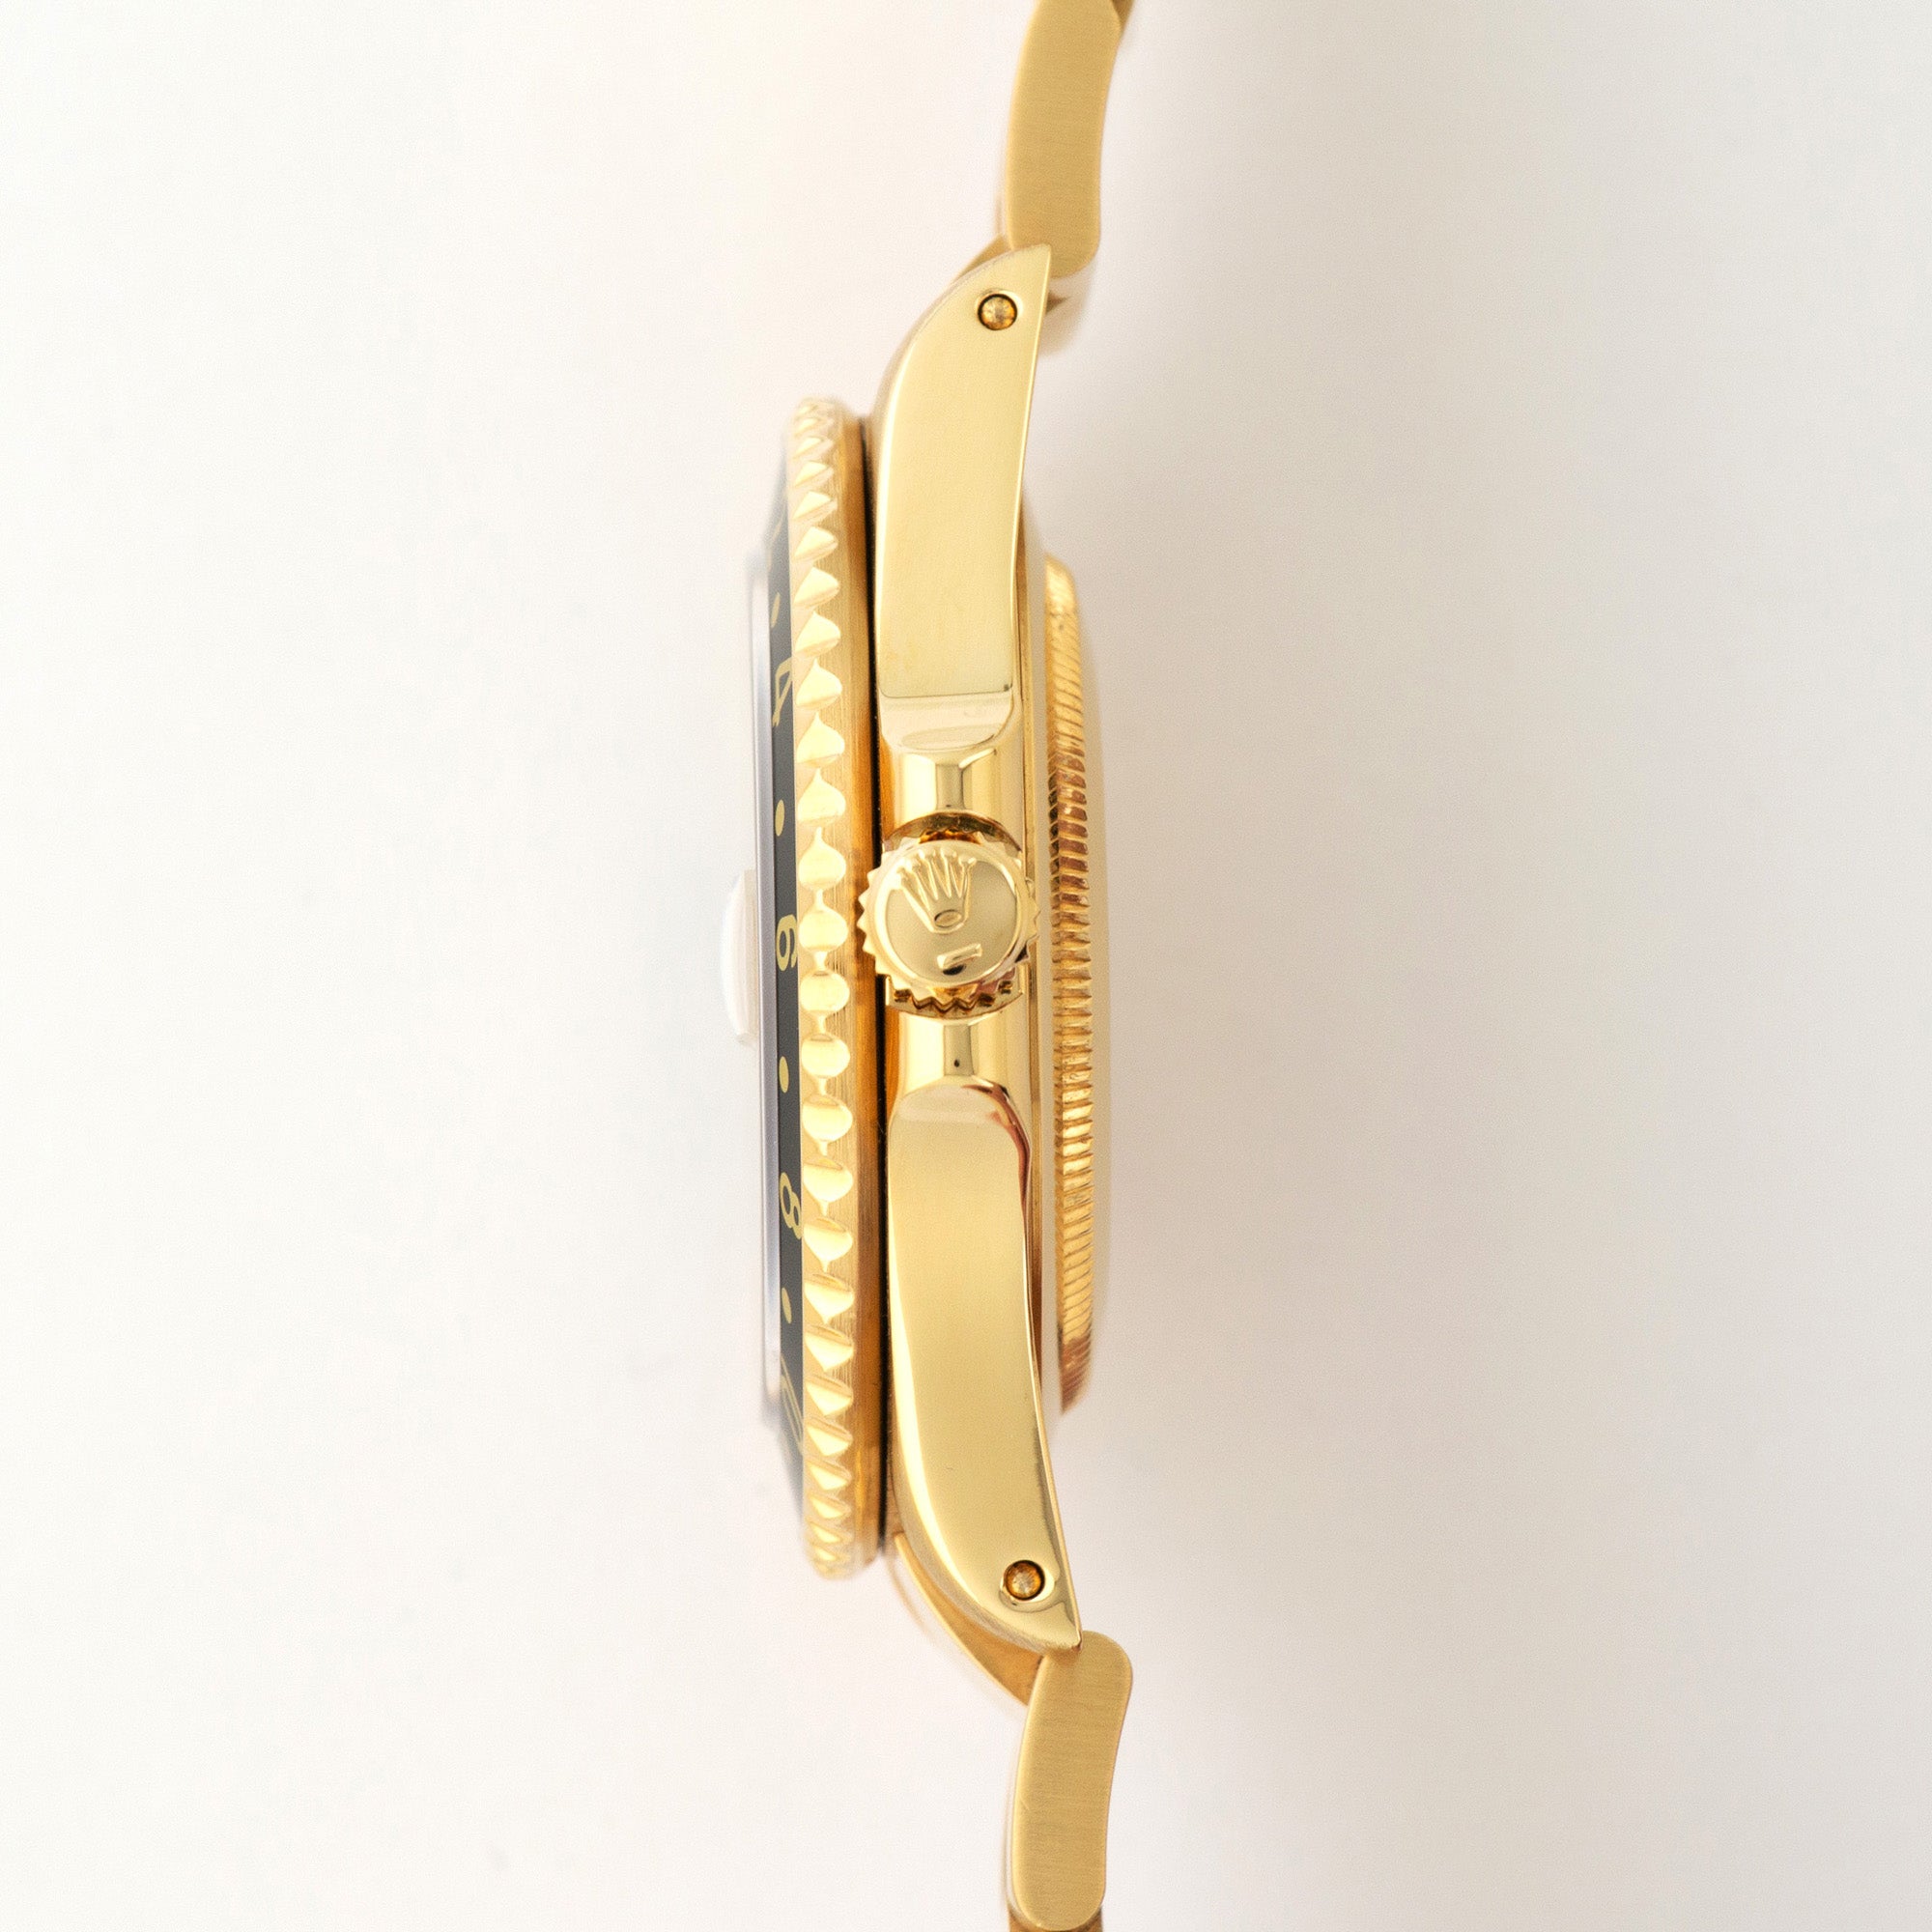 Rolex Yellow Gold GMT-Master II Diamond &amp; Ruby Watch Ref. 16718